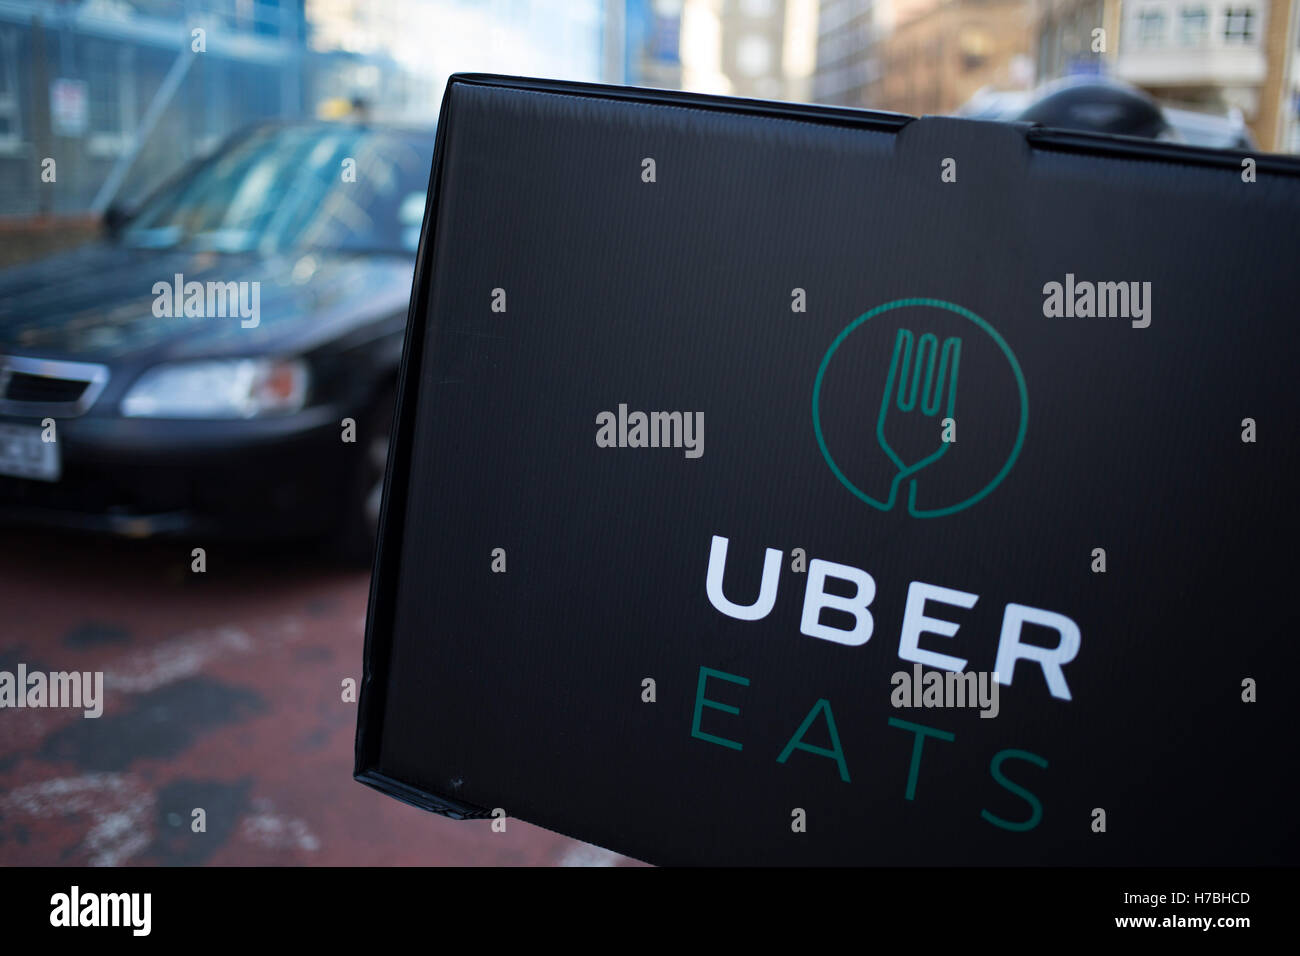 Uber Eats Stock Photos & Uber Eats Stock Images - Alamy